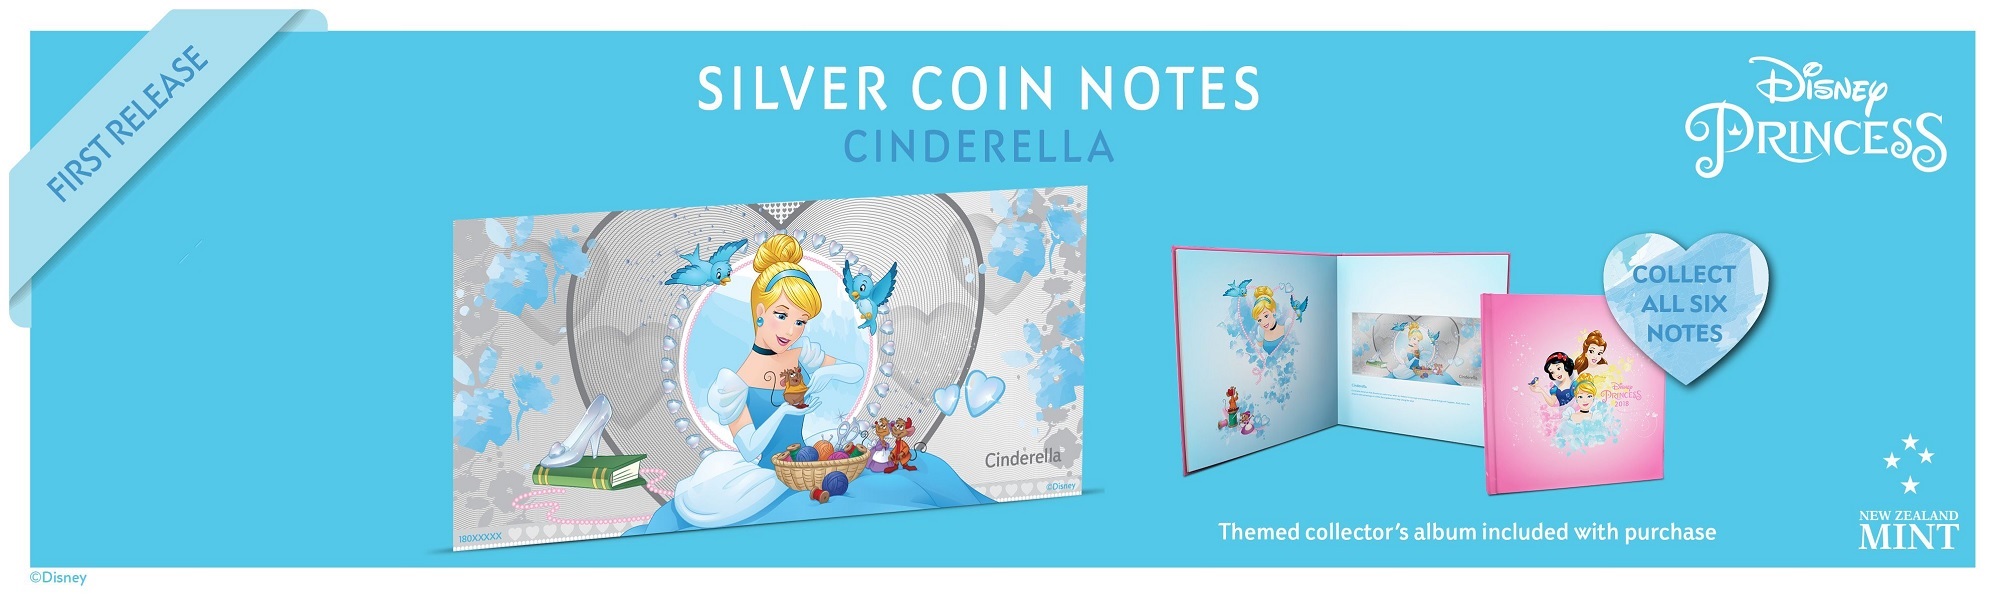 (W160.100.2018.30-00645) 1 Dollar Niue 2018 5 grams BU silver - Cinderella (blog illustration) (zoom)